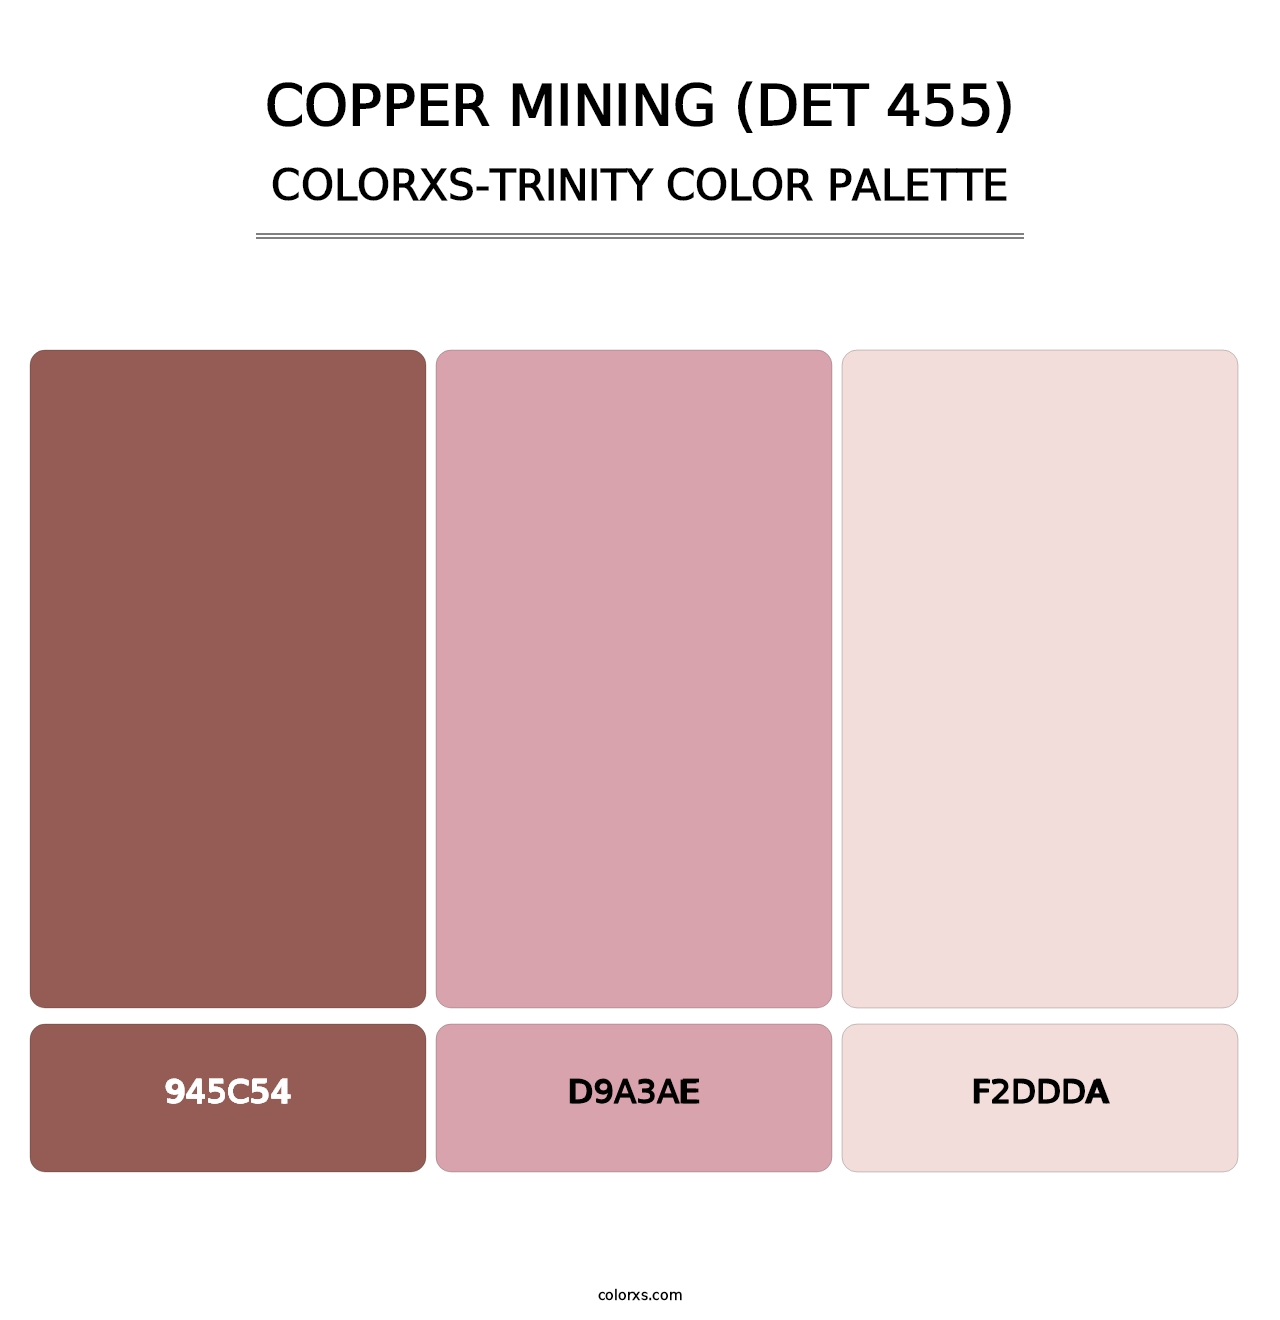 Copper Mining (DET 455) - Colorxs Trinity Palette